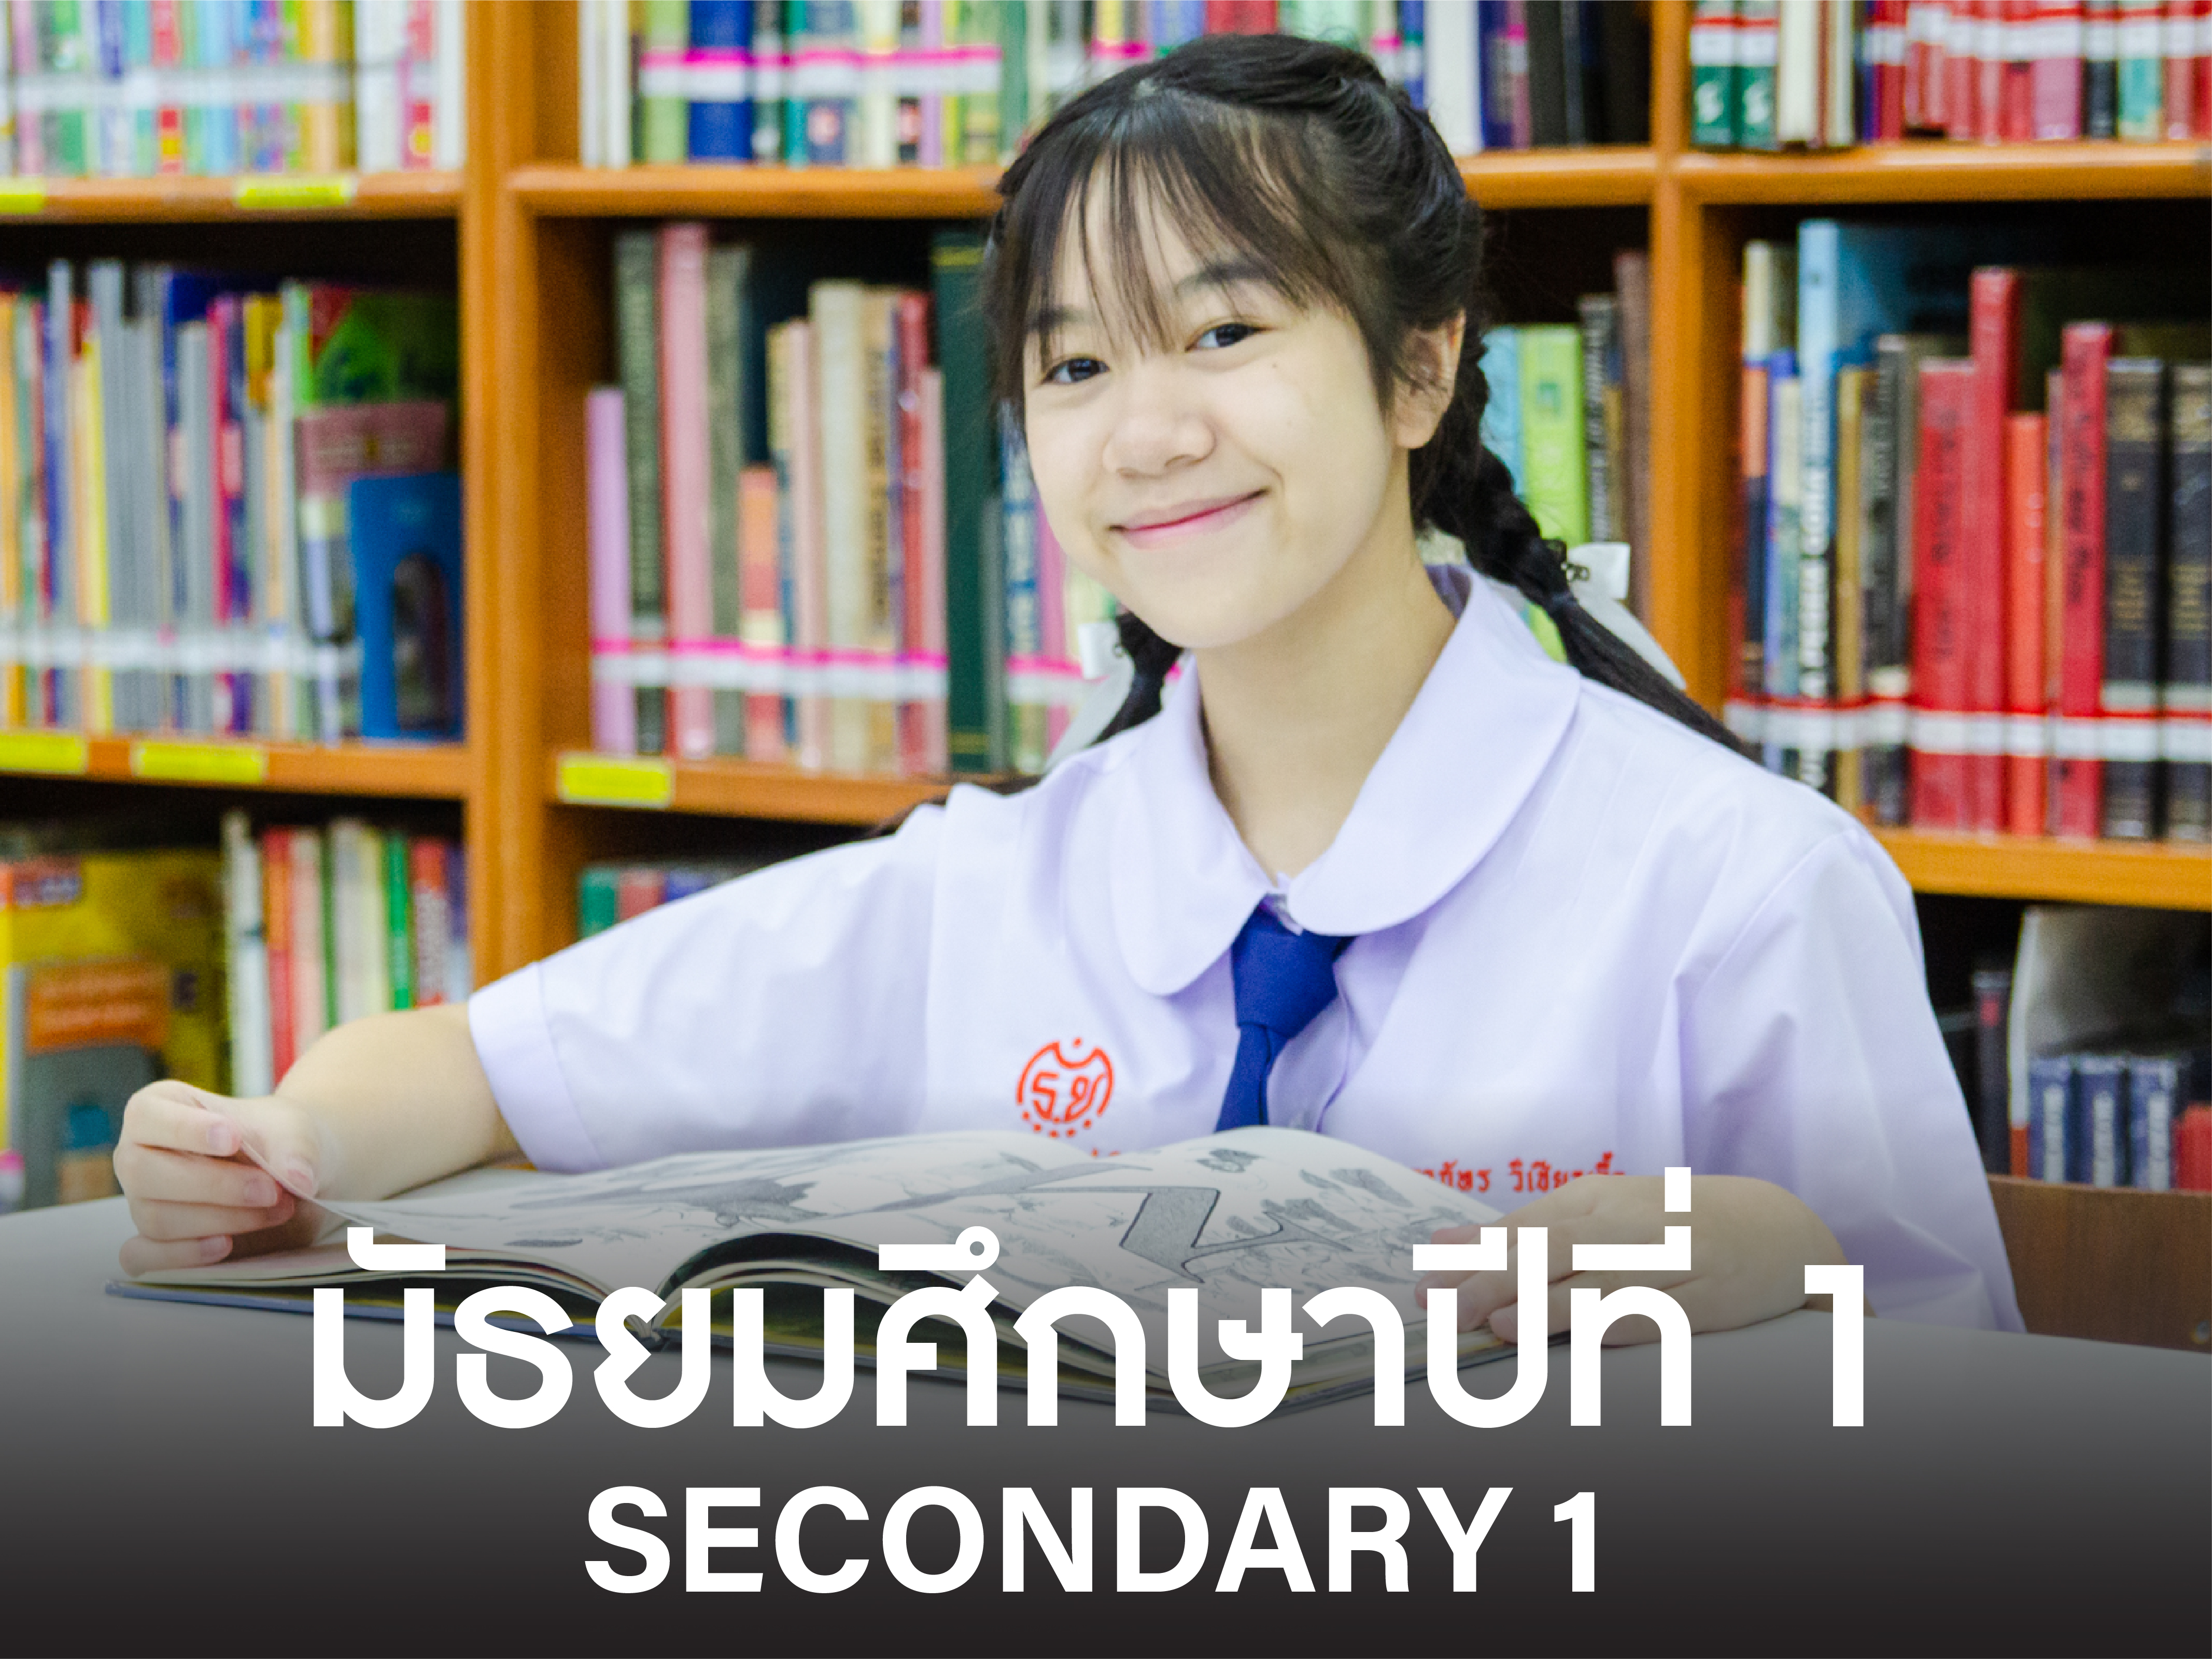 Secondary 1